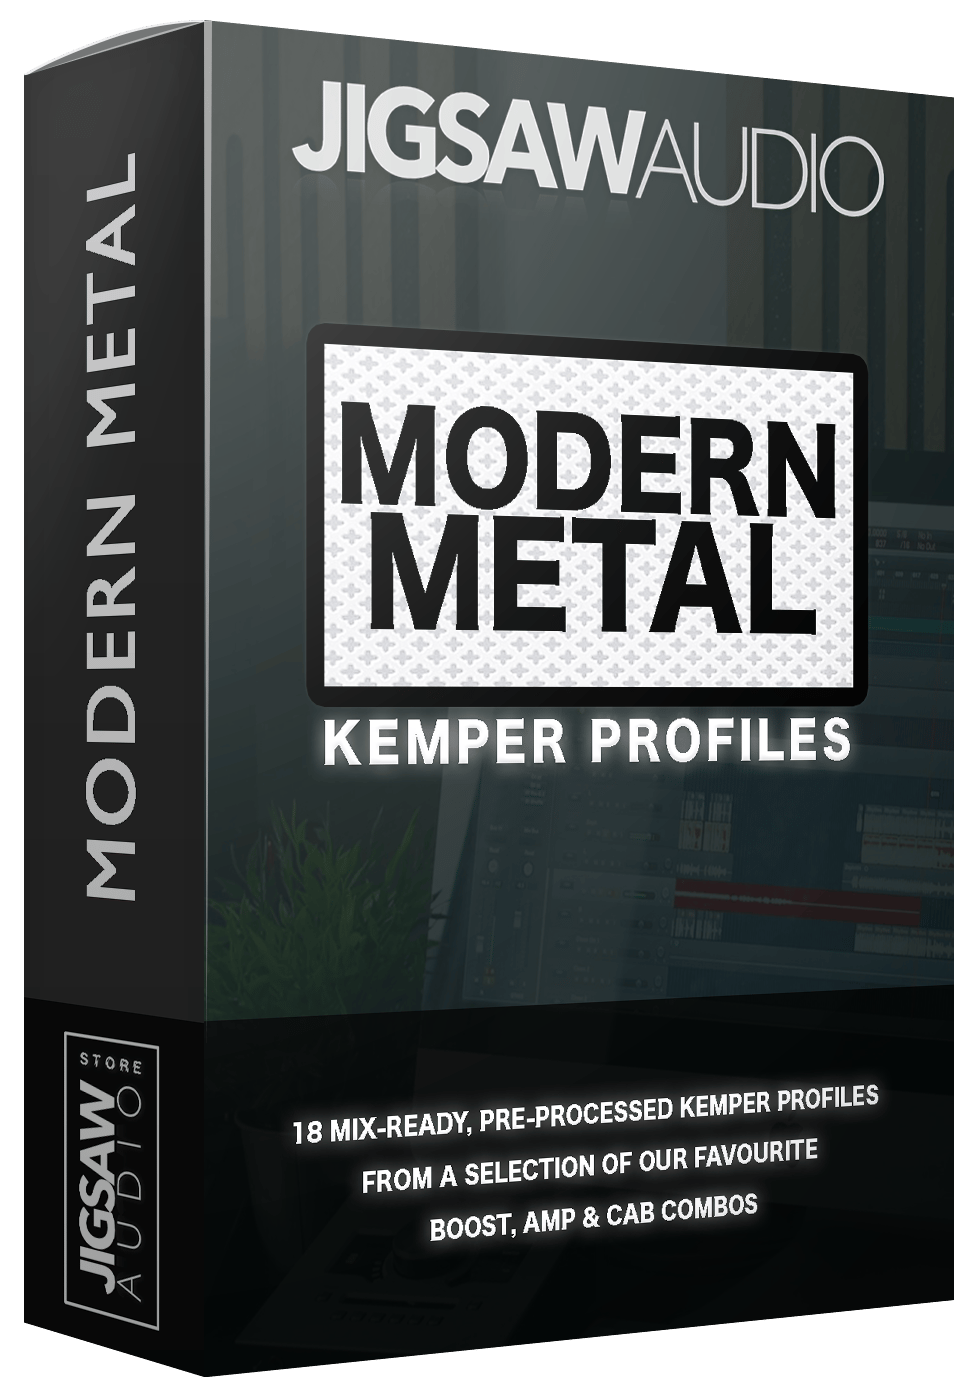 Image of Modern Metal Kemper Pack